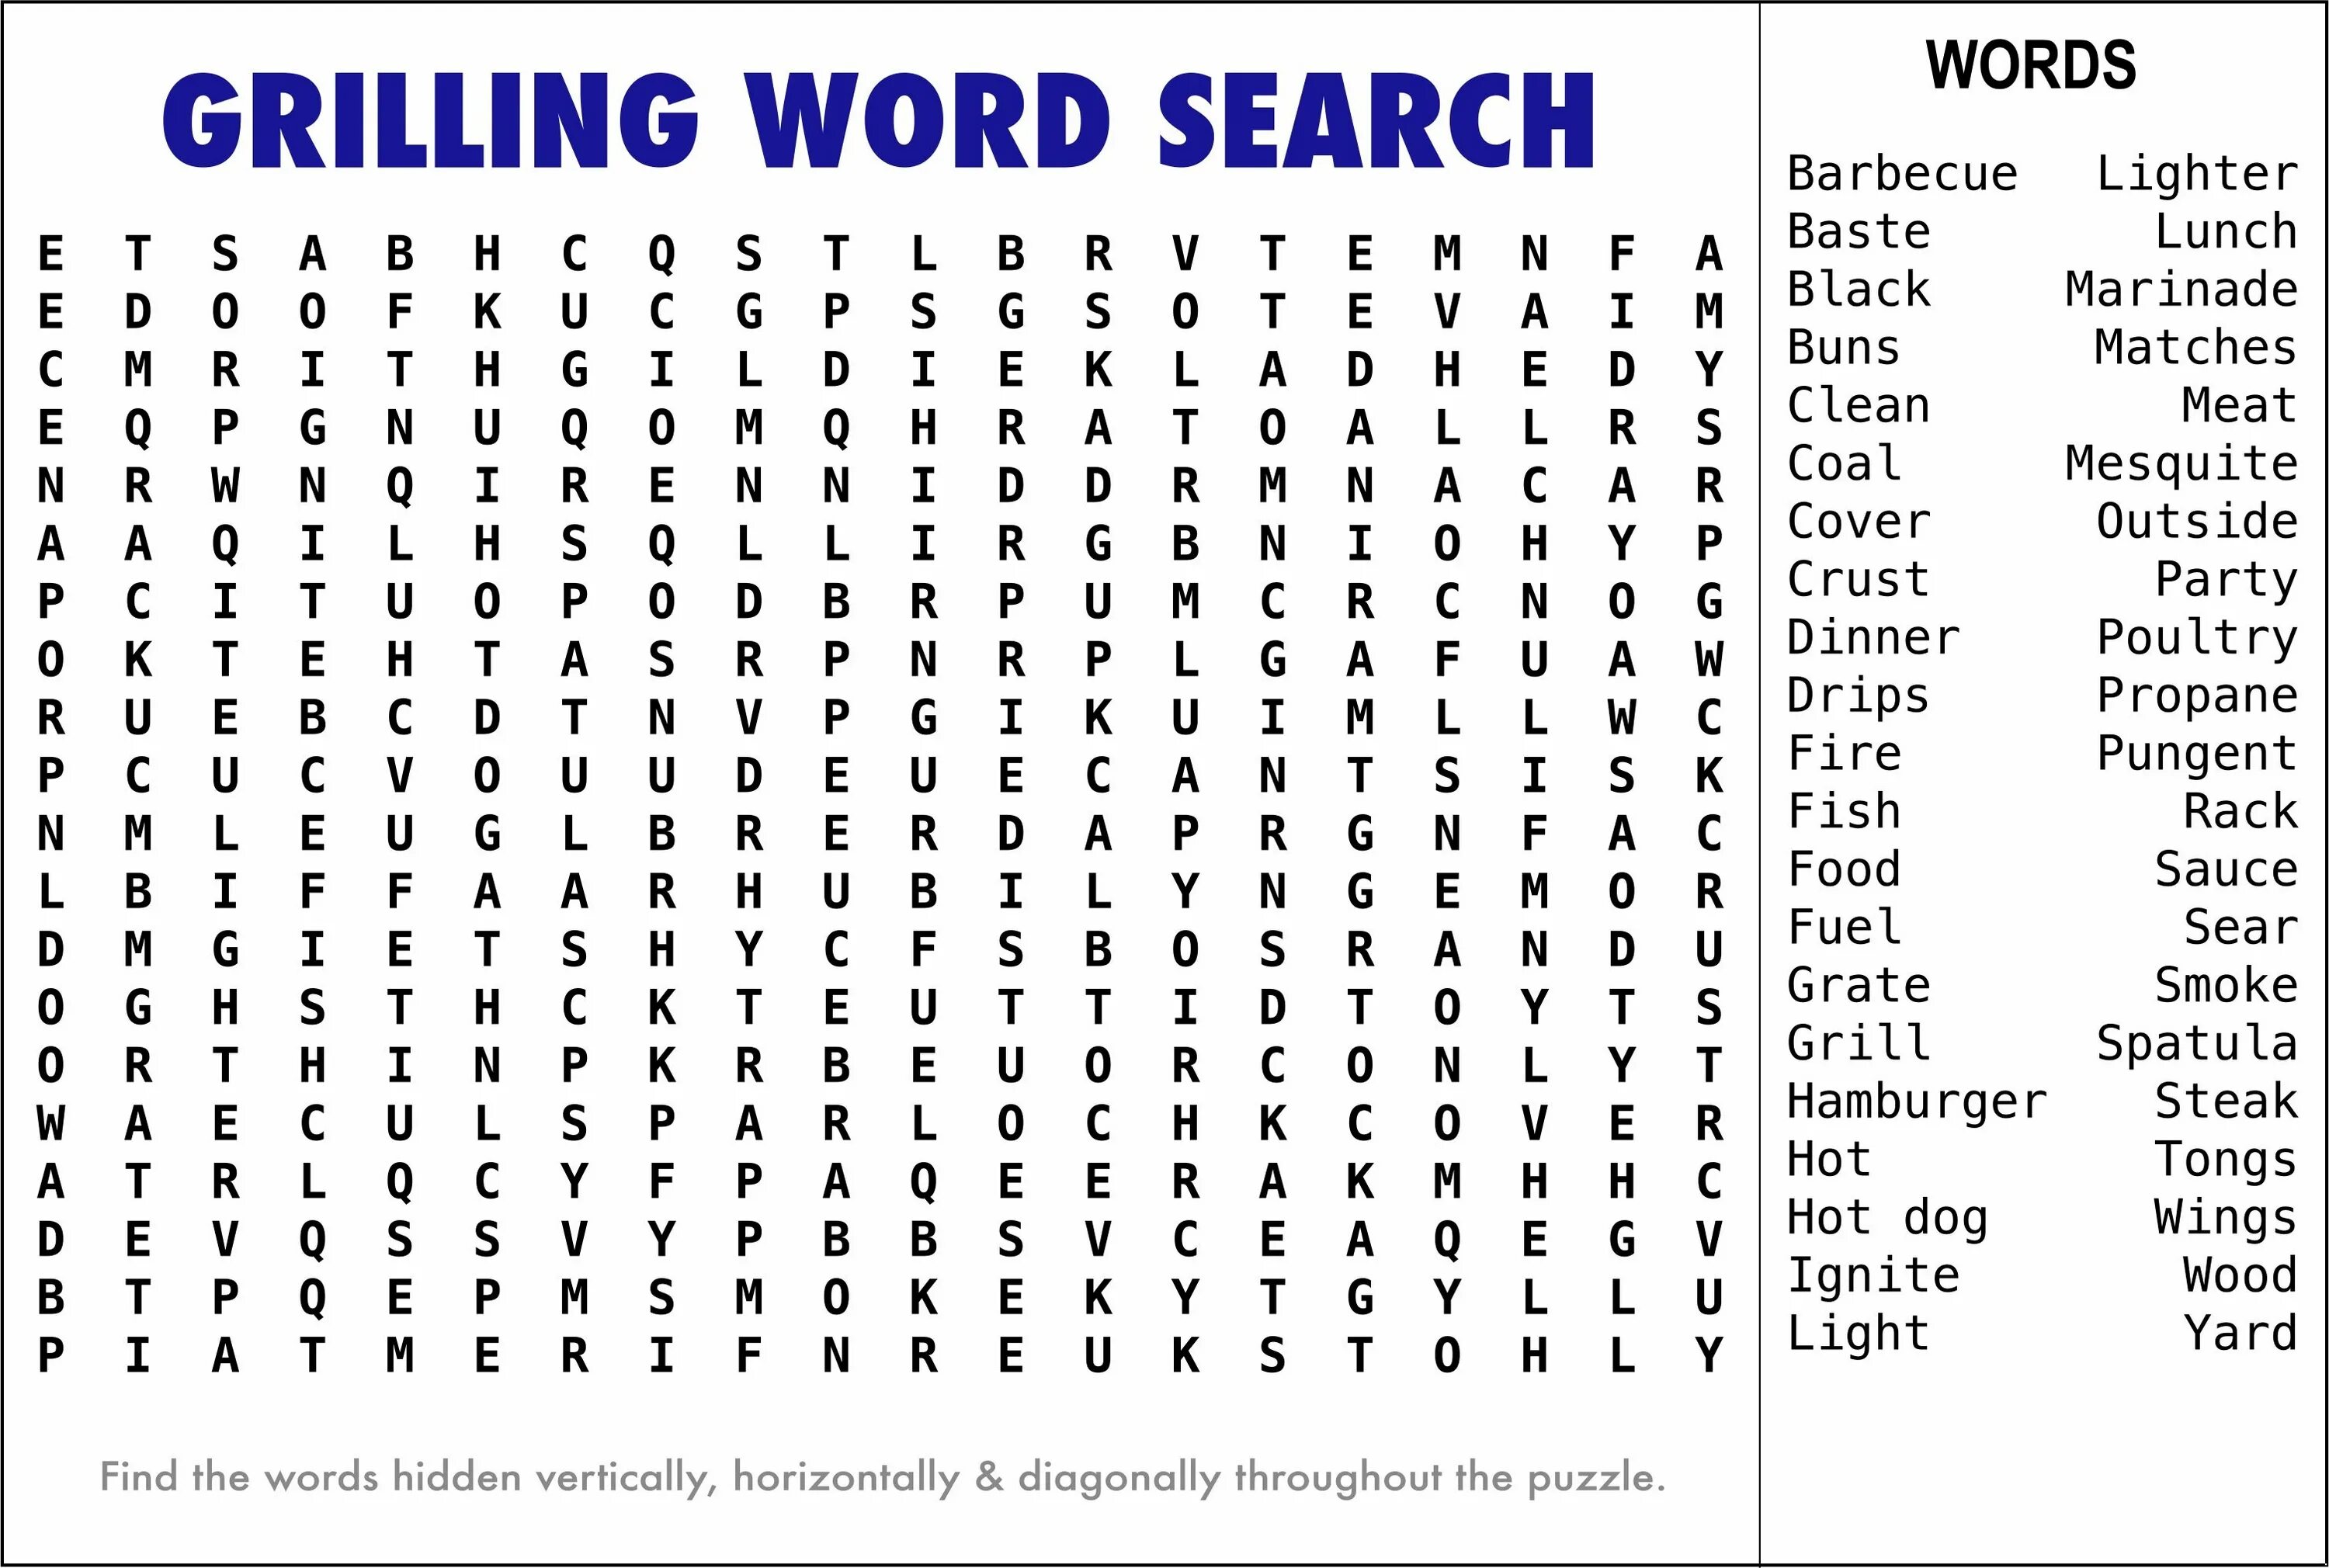 Find c v. Поиск слов на сангл. Word Puzzle игра. Wordsearch. Найти слова на английском языке.